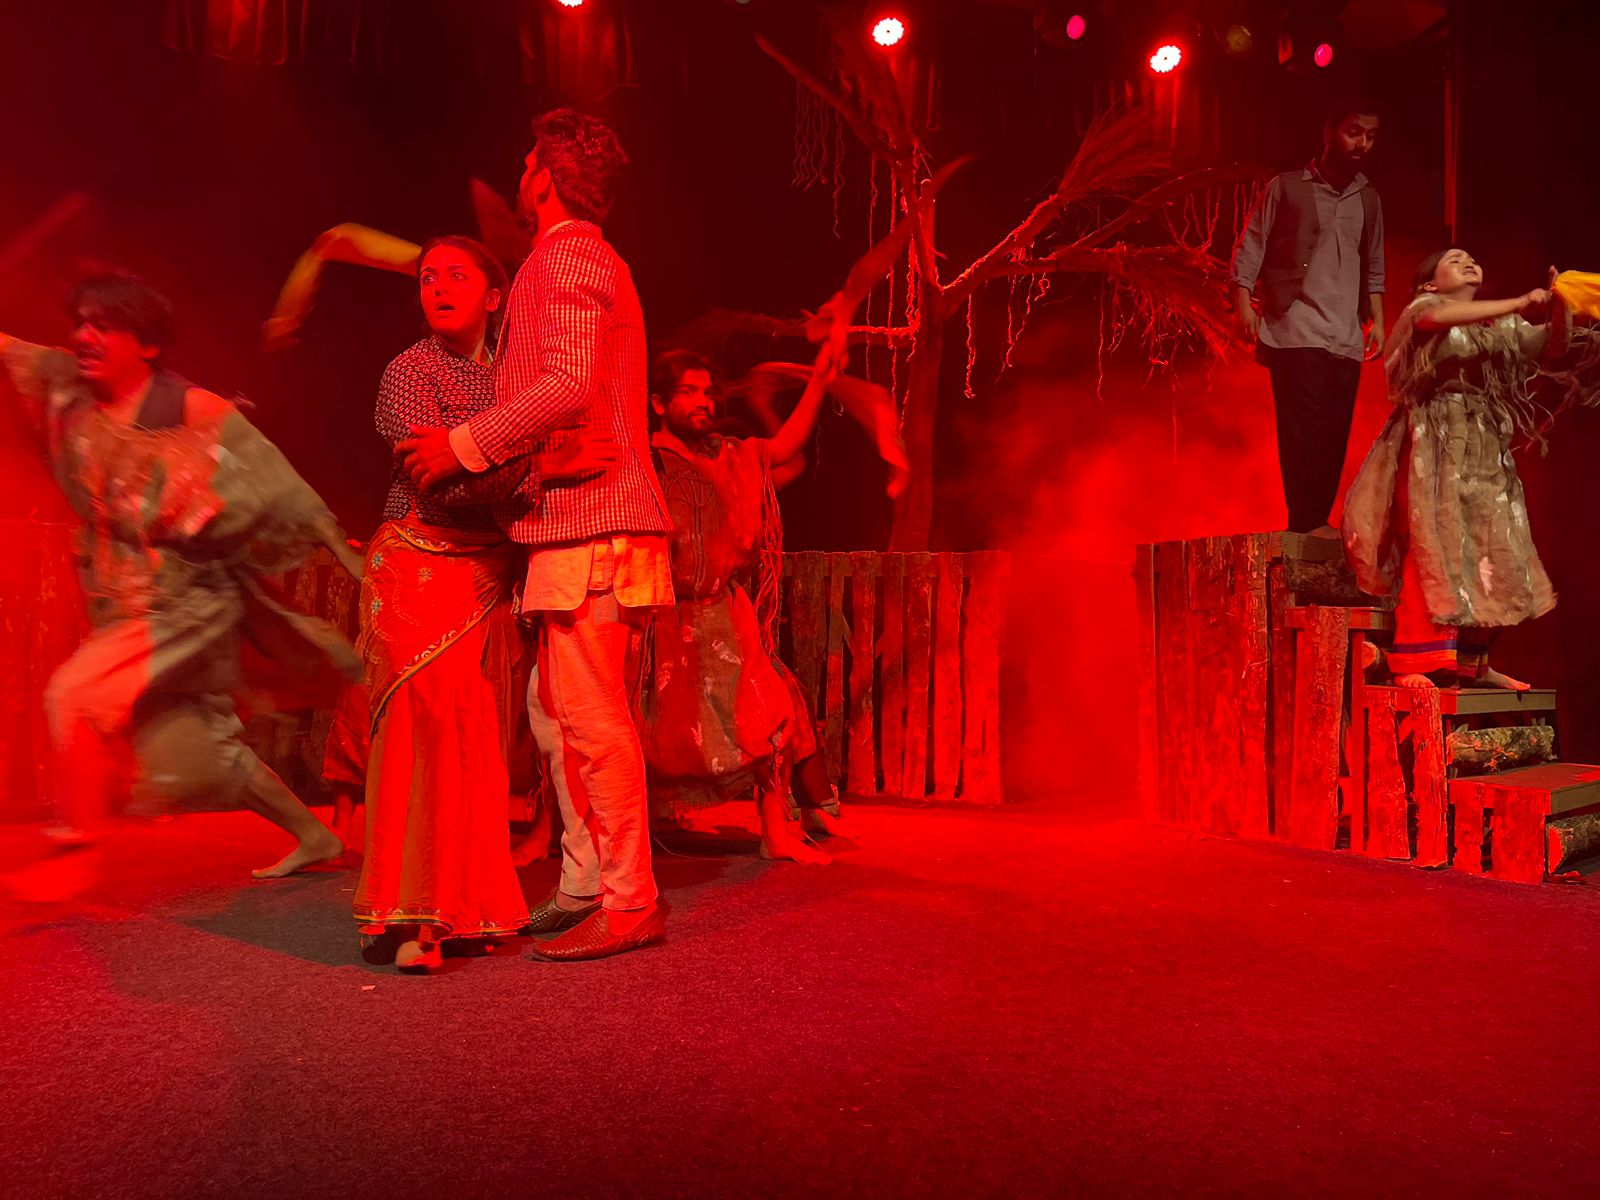 नेपाली नाटक ‘क्लेशाः’ भारत रङ्ग महोत्सवमा मञ्चन